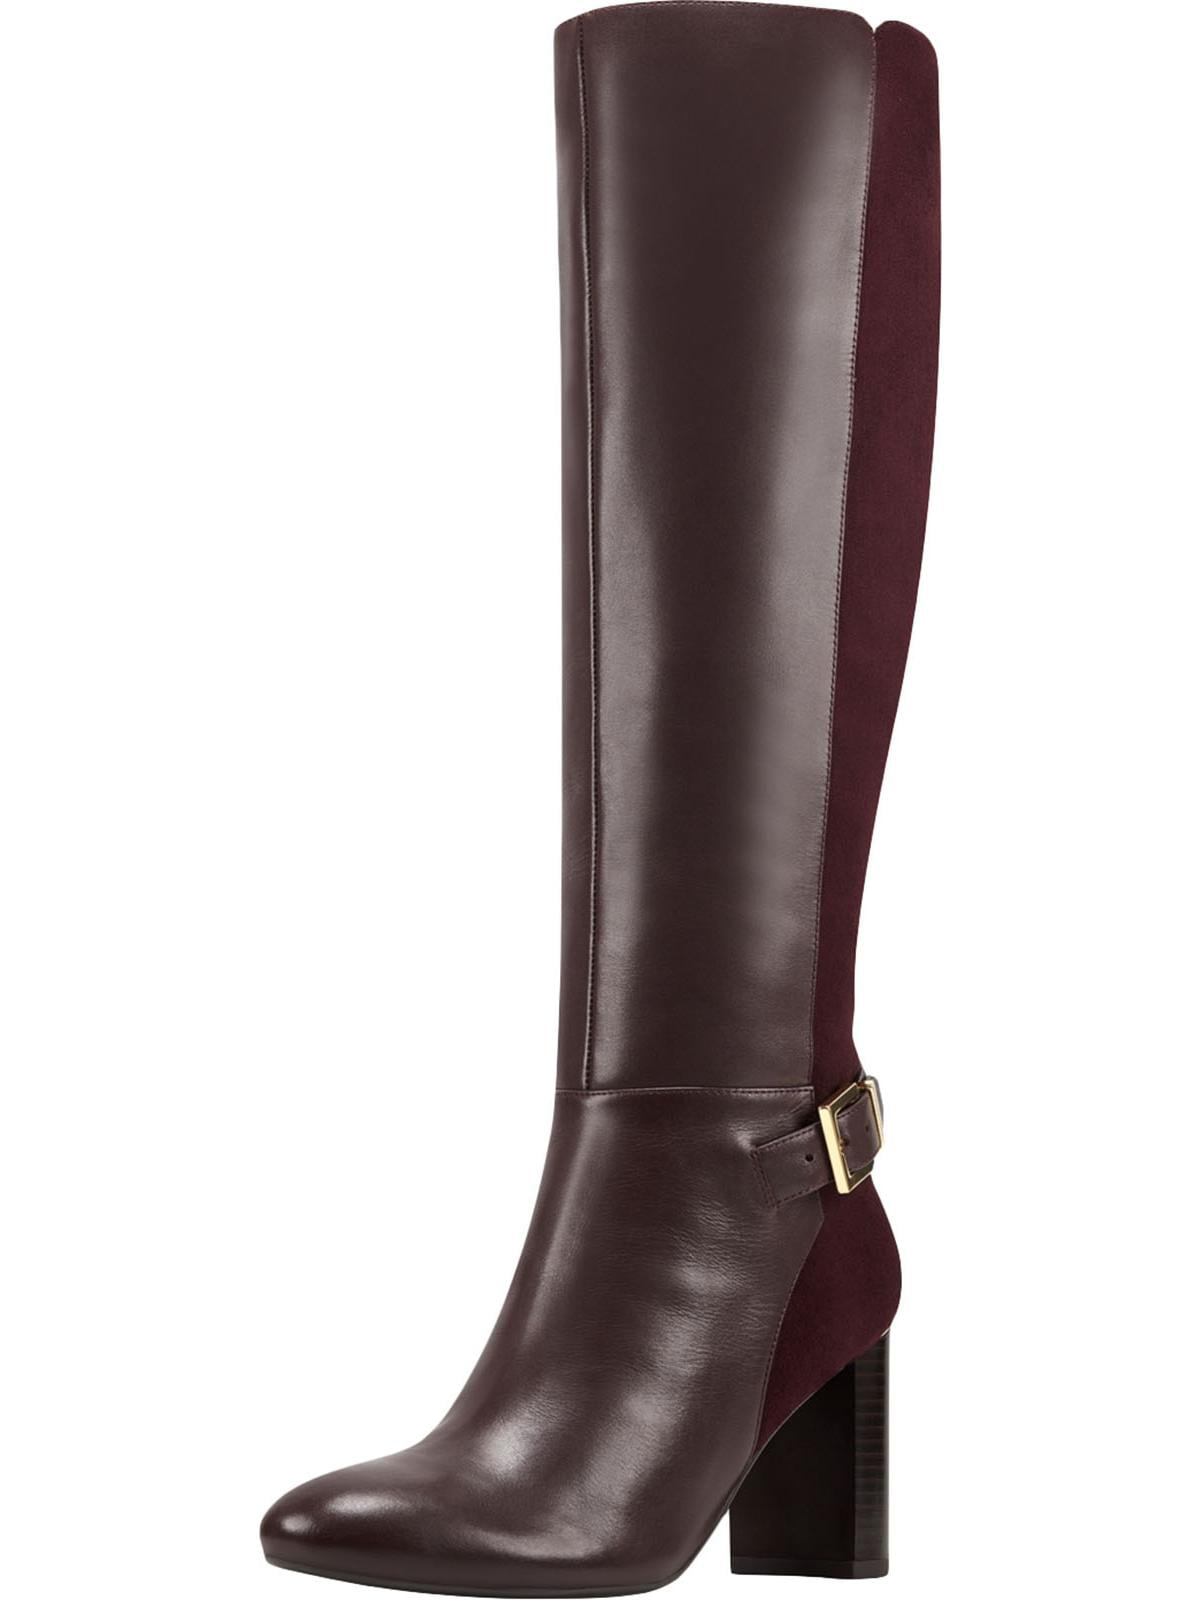 Bandolino Womens Bilya Leather Knee-High Riding Boots Red 7 Medium (B,M)